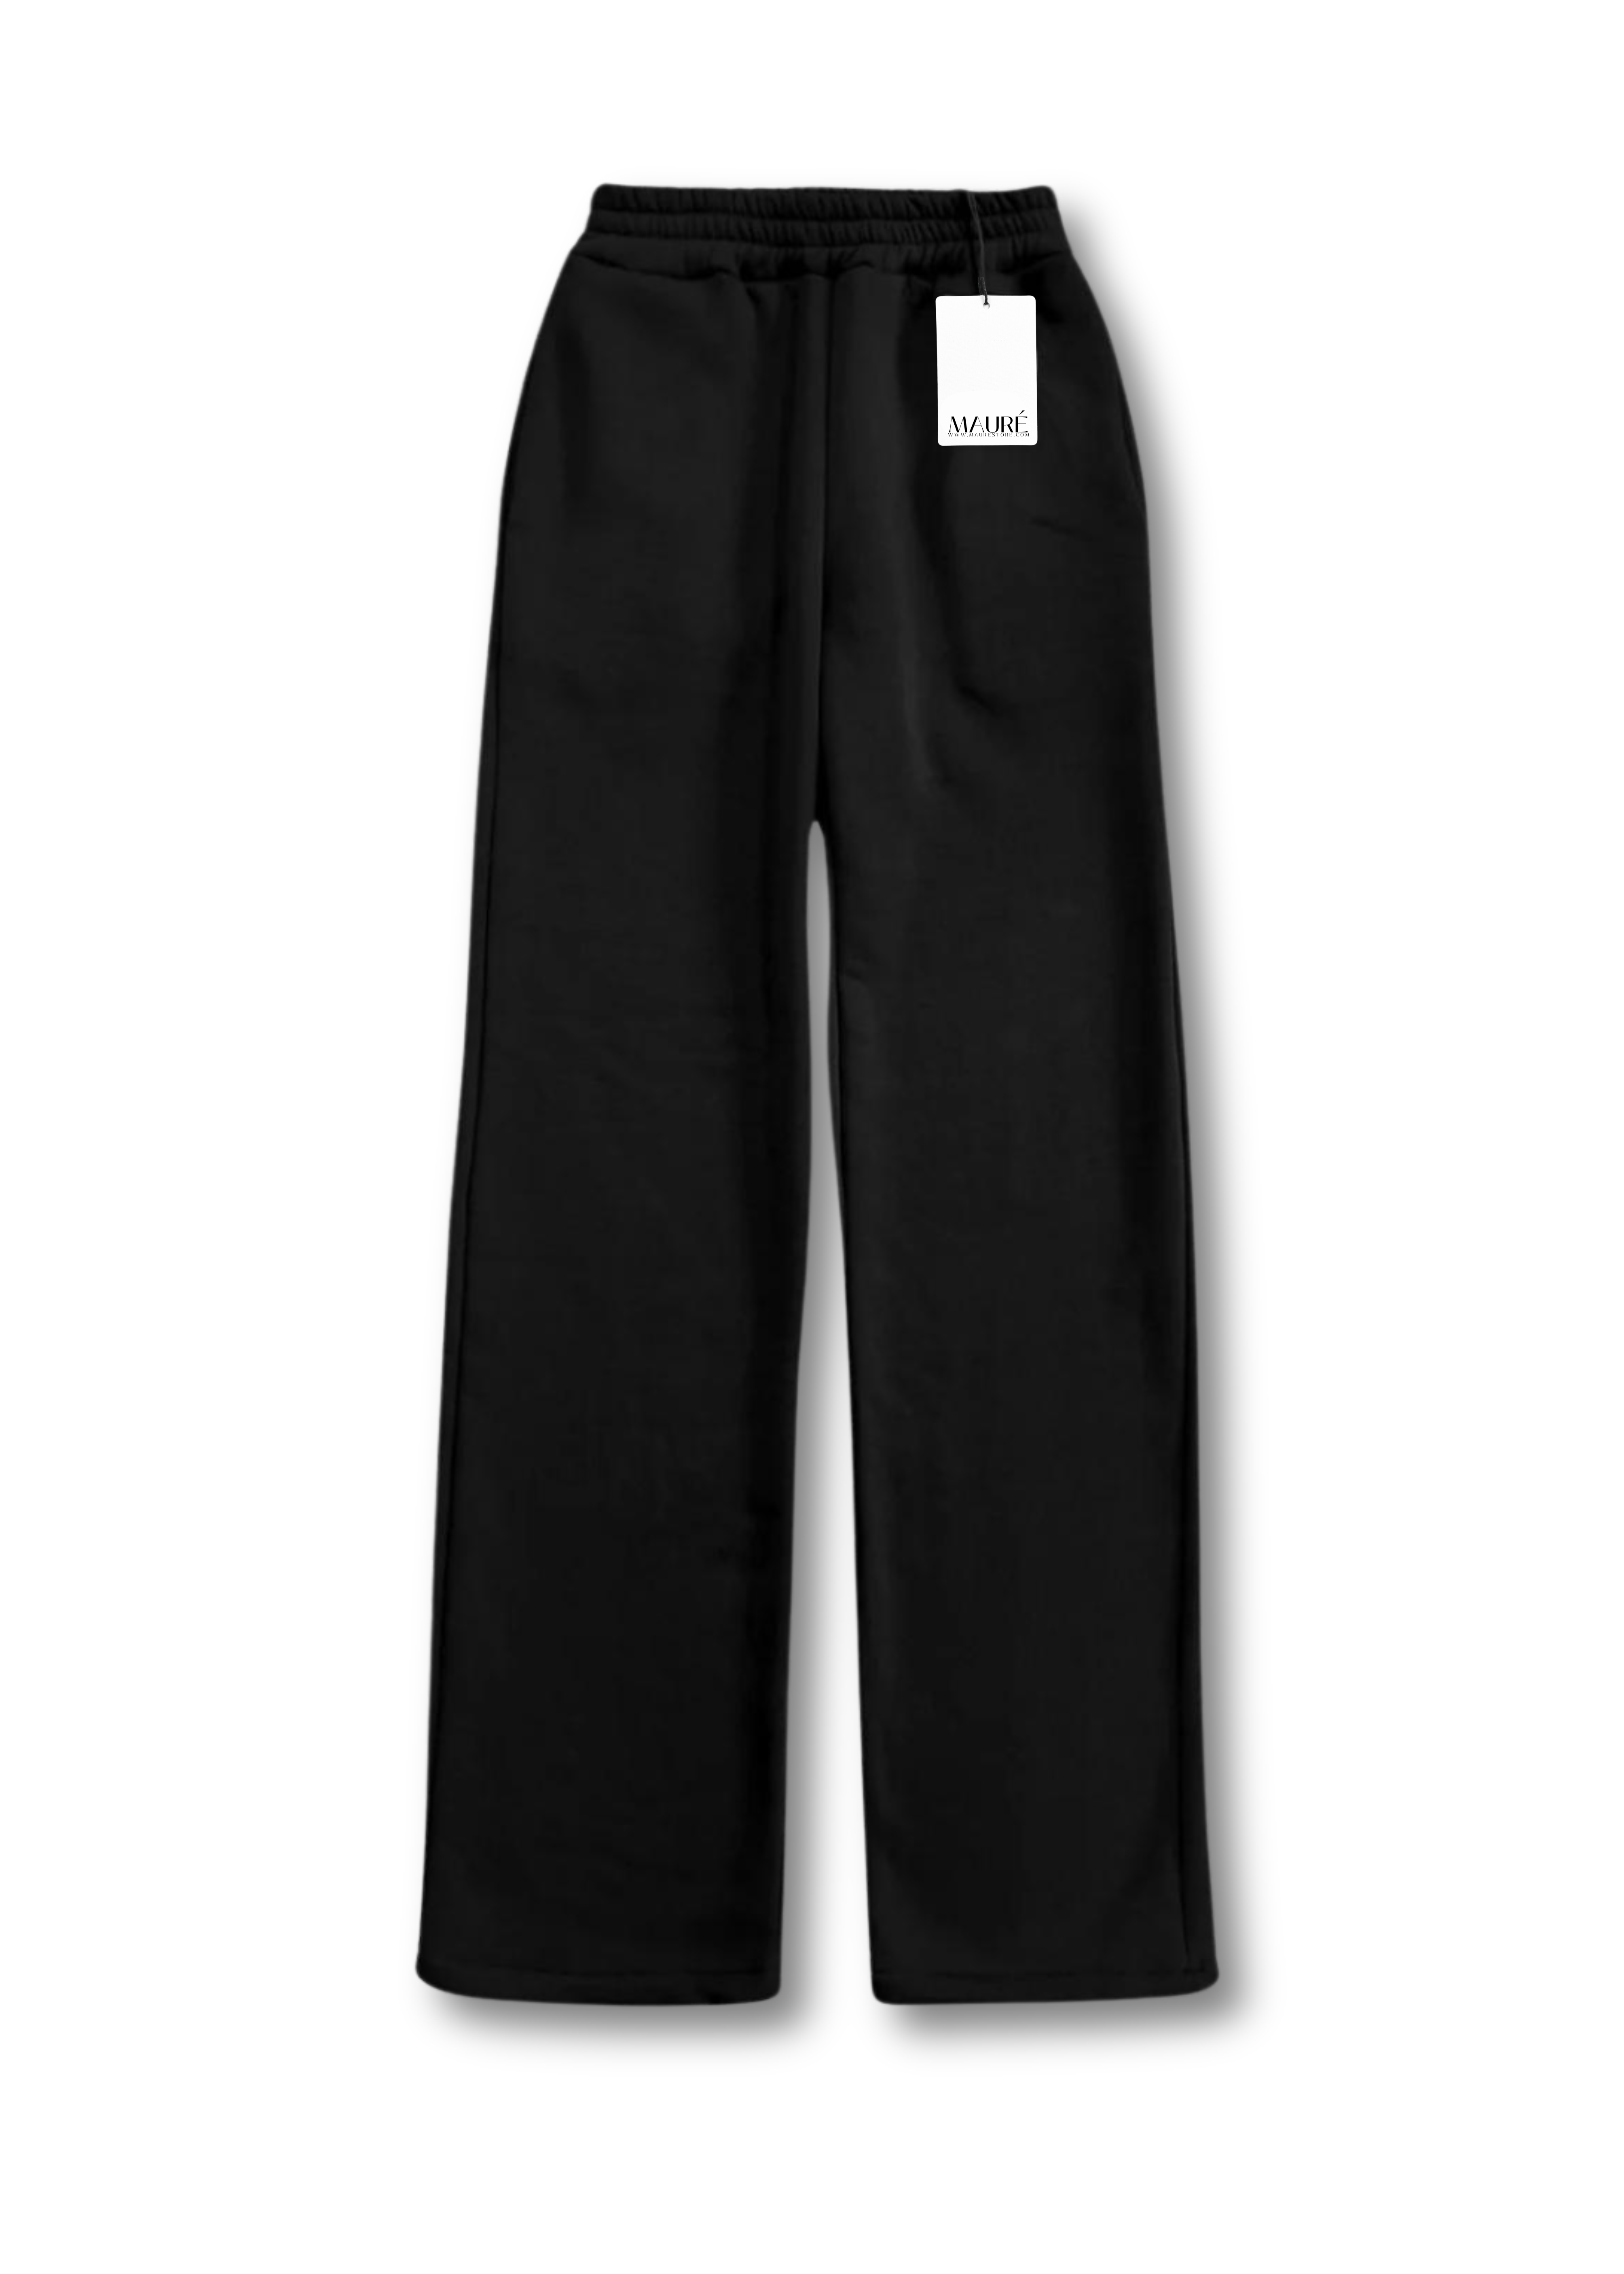 High waist jogger pants black (TALL)